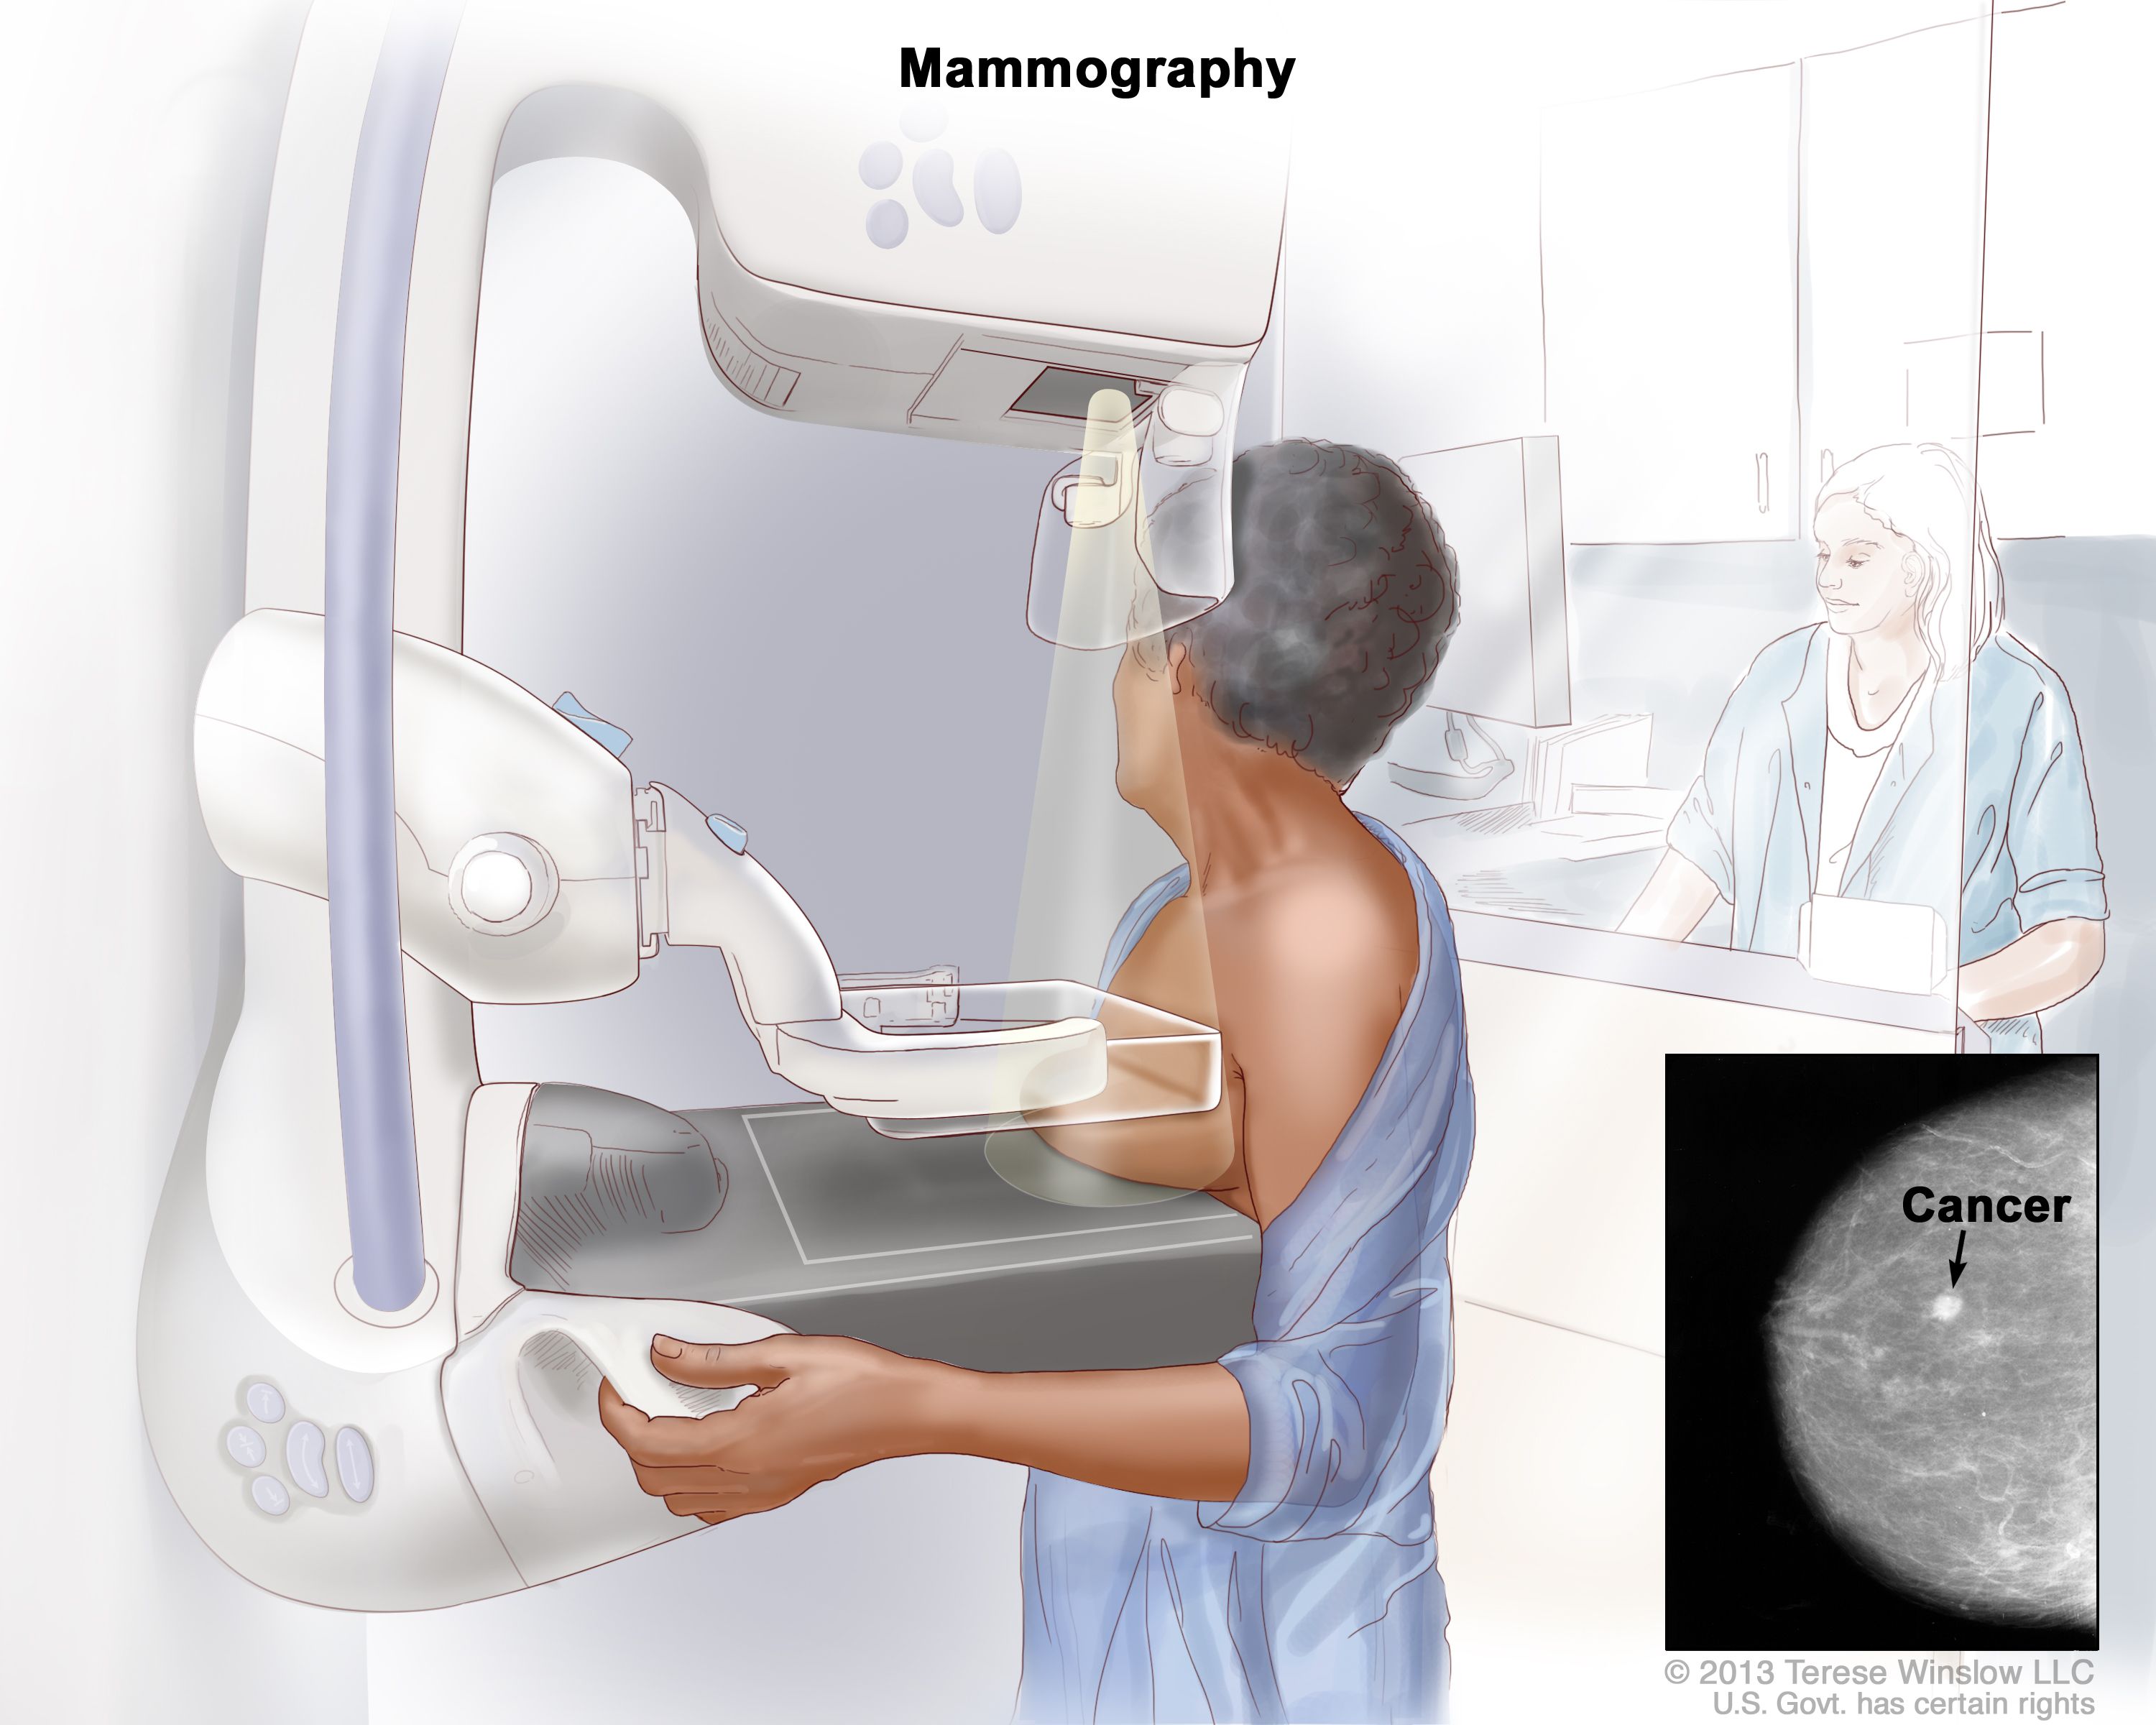 Do Mammograms Hurt?, Breast Cancer Screening